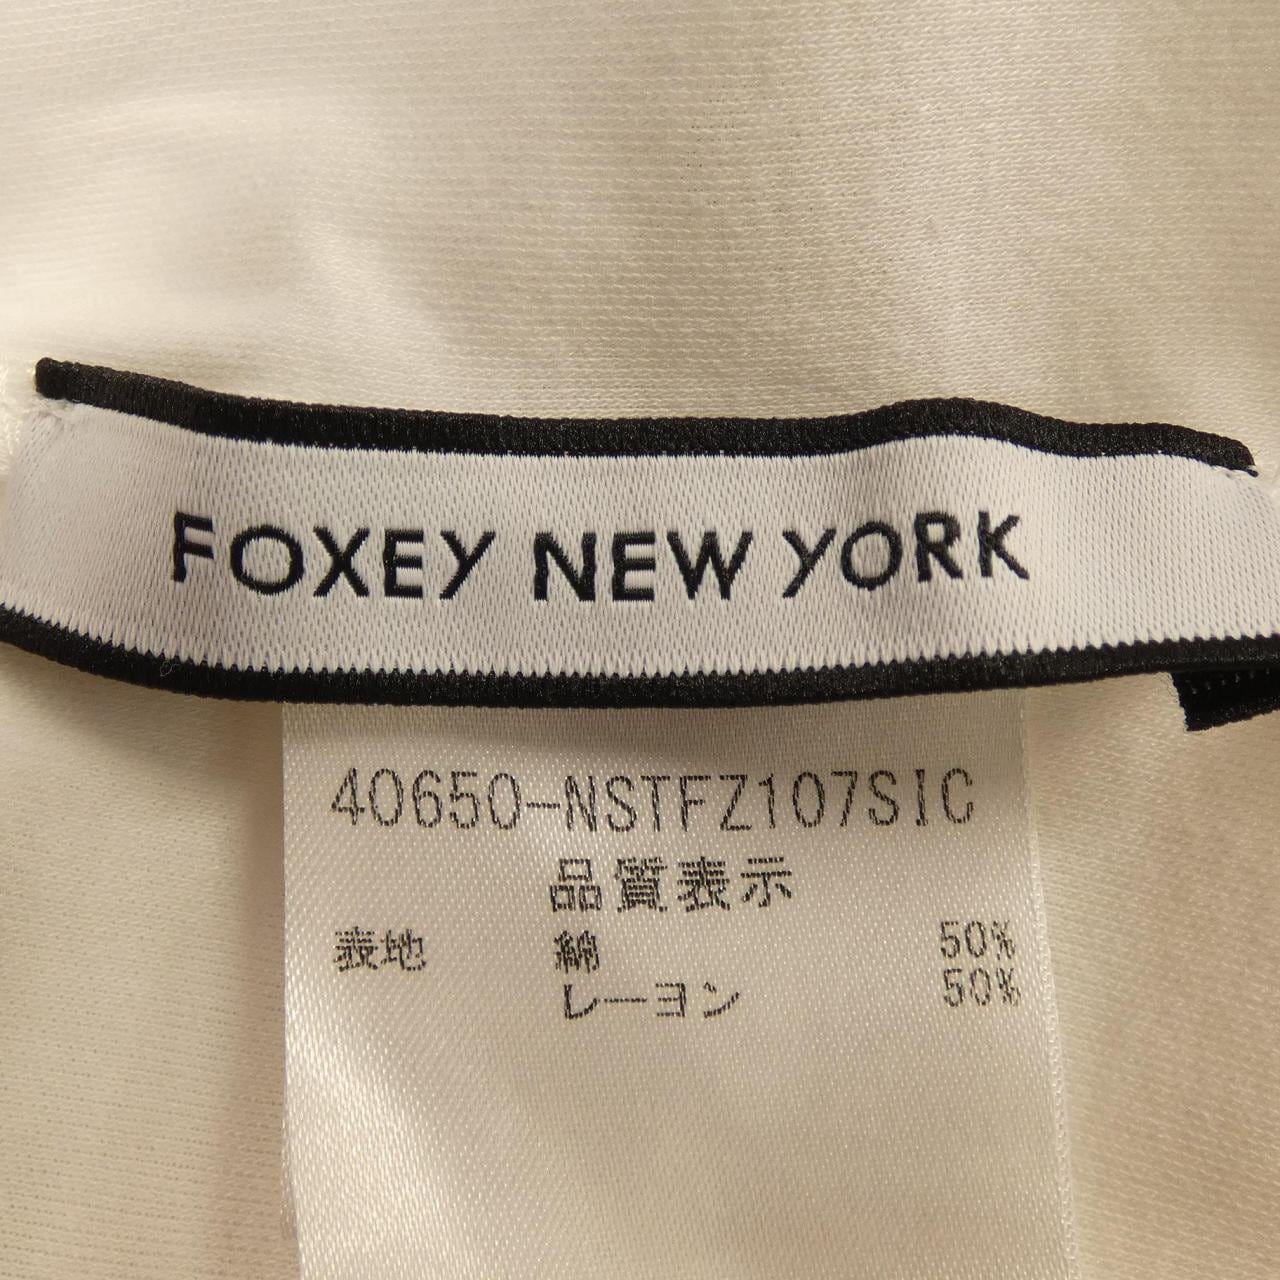 Foxy New York FOXEY NEW YORK T-shirt